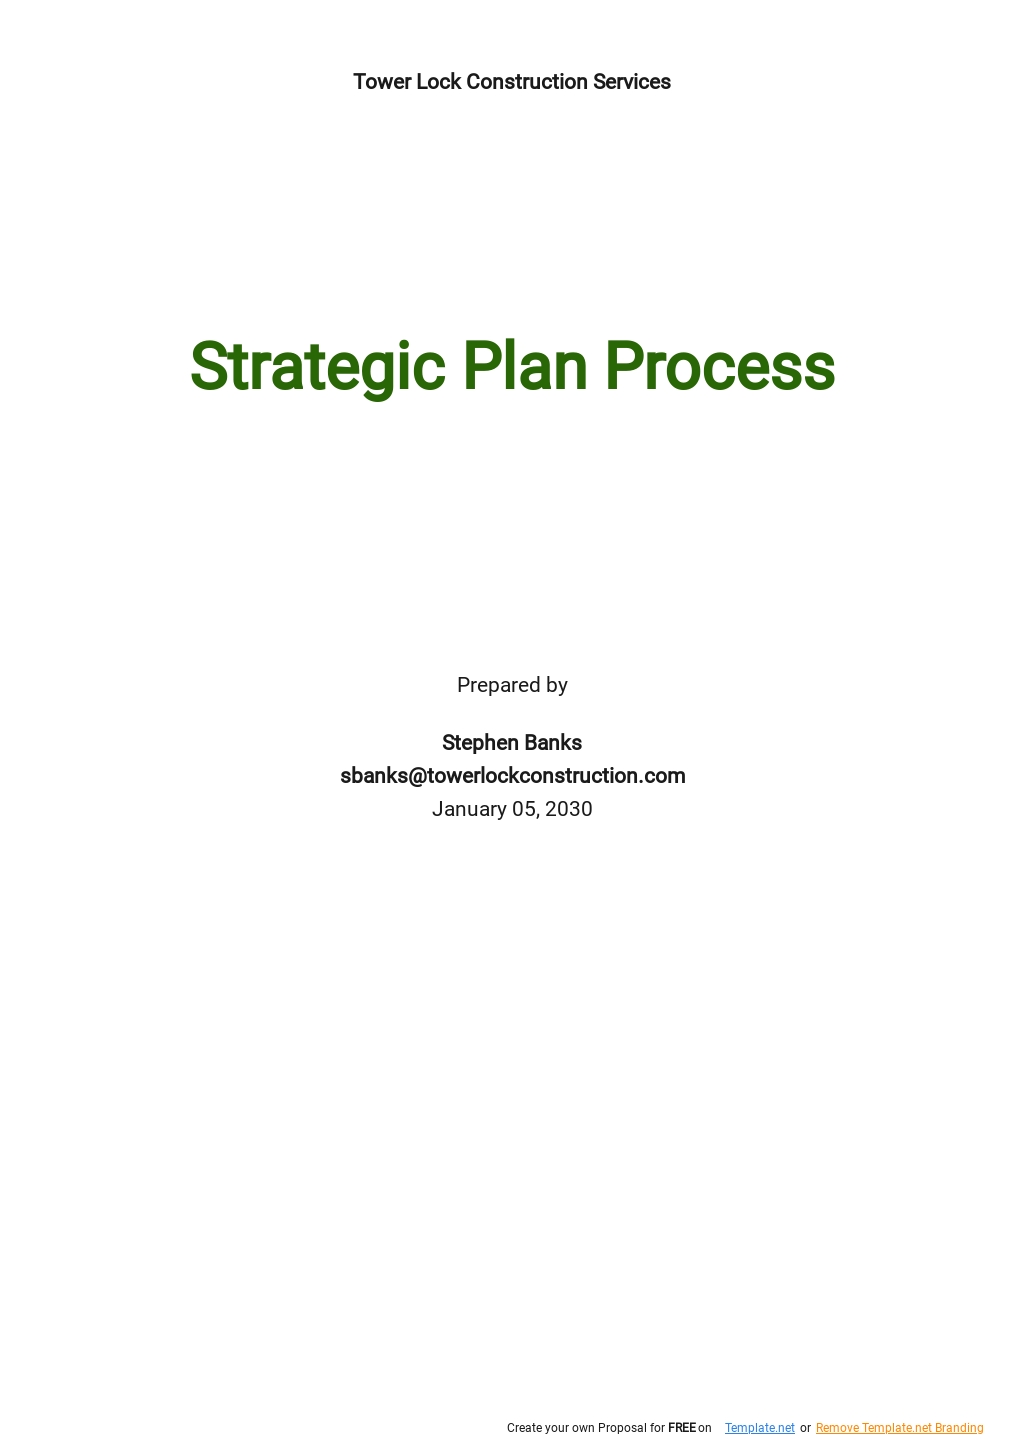 Strategic Plan Process Template.jpe